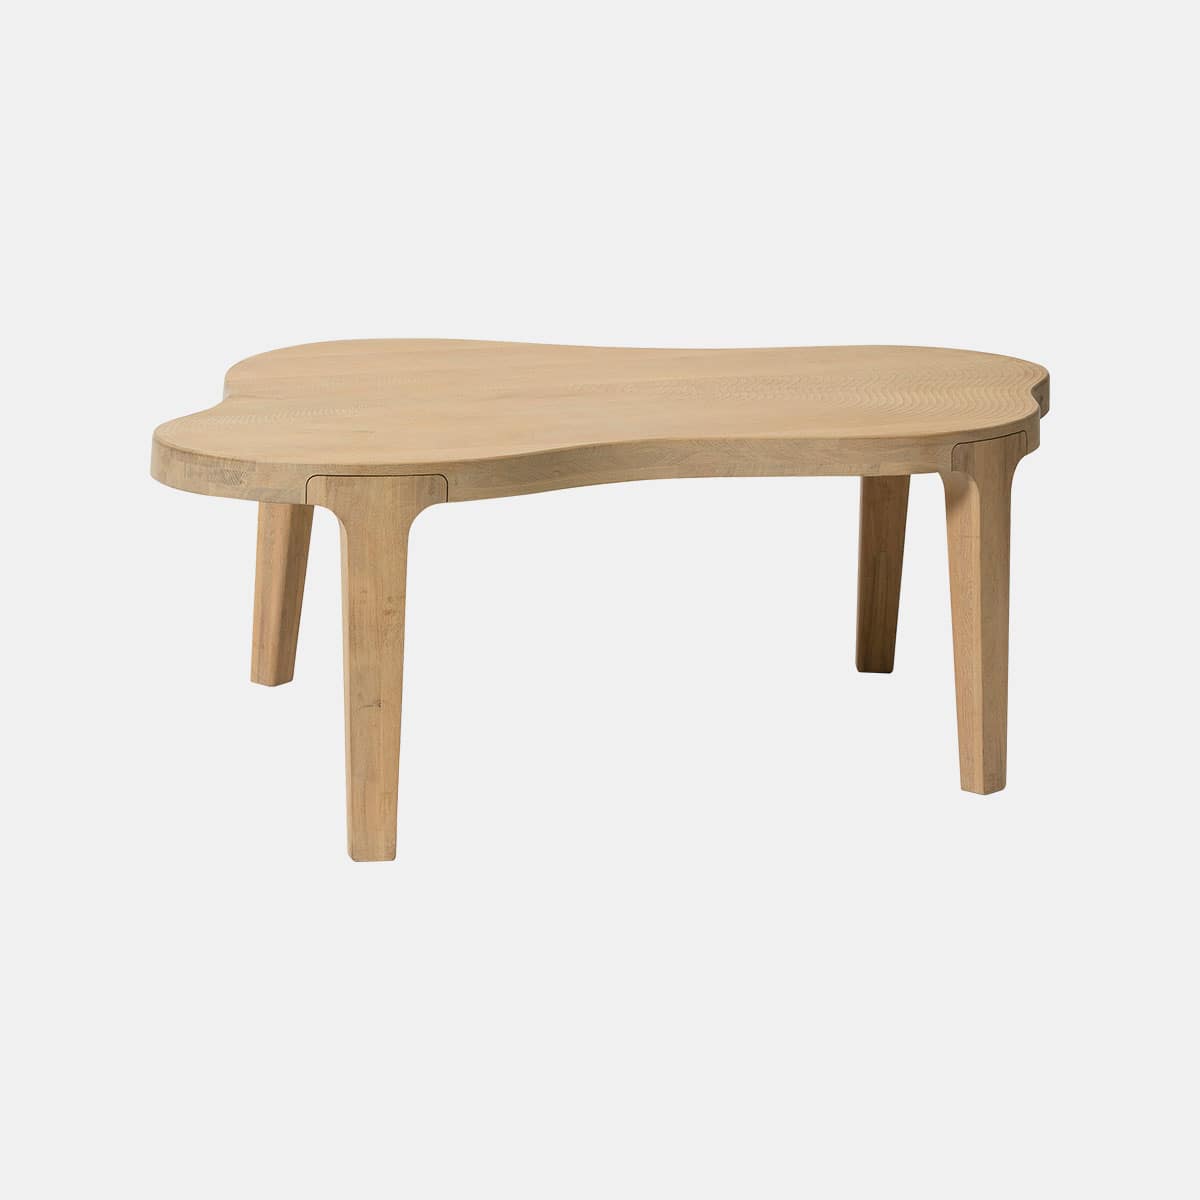 linteloo-roderick-vos-isola-dining-table-eiken-white-wash-224x153-001shop